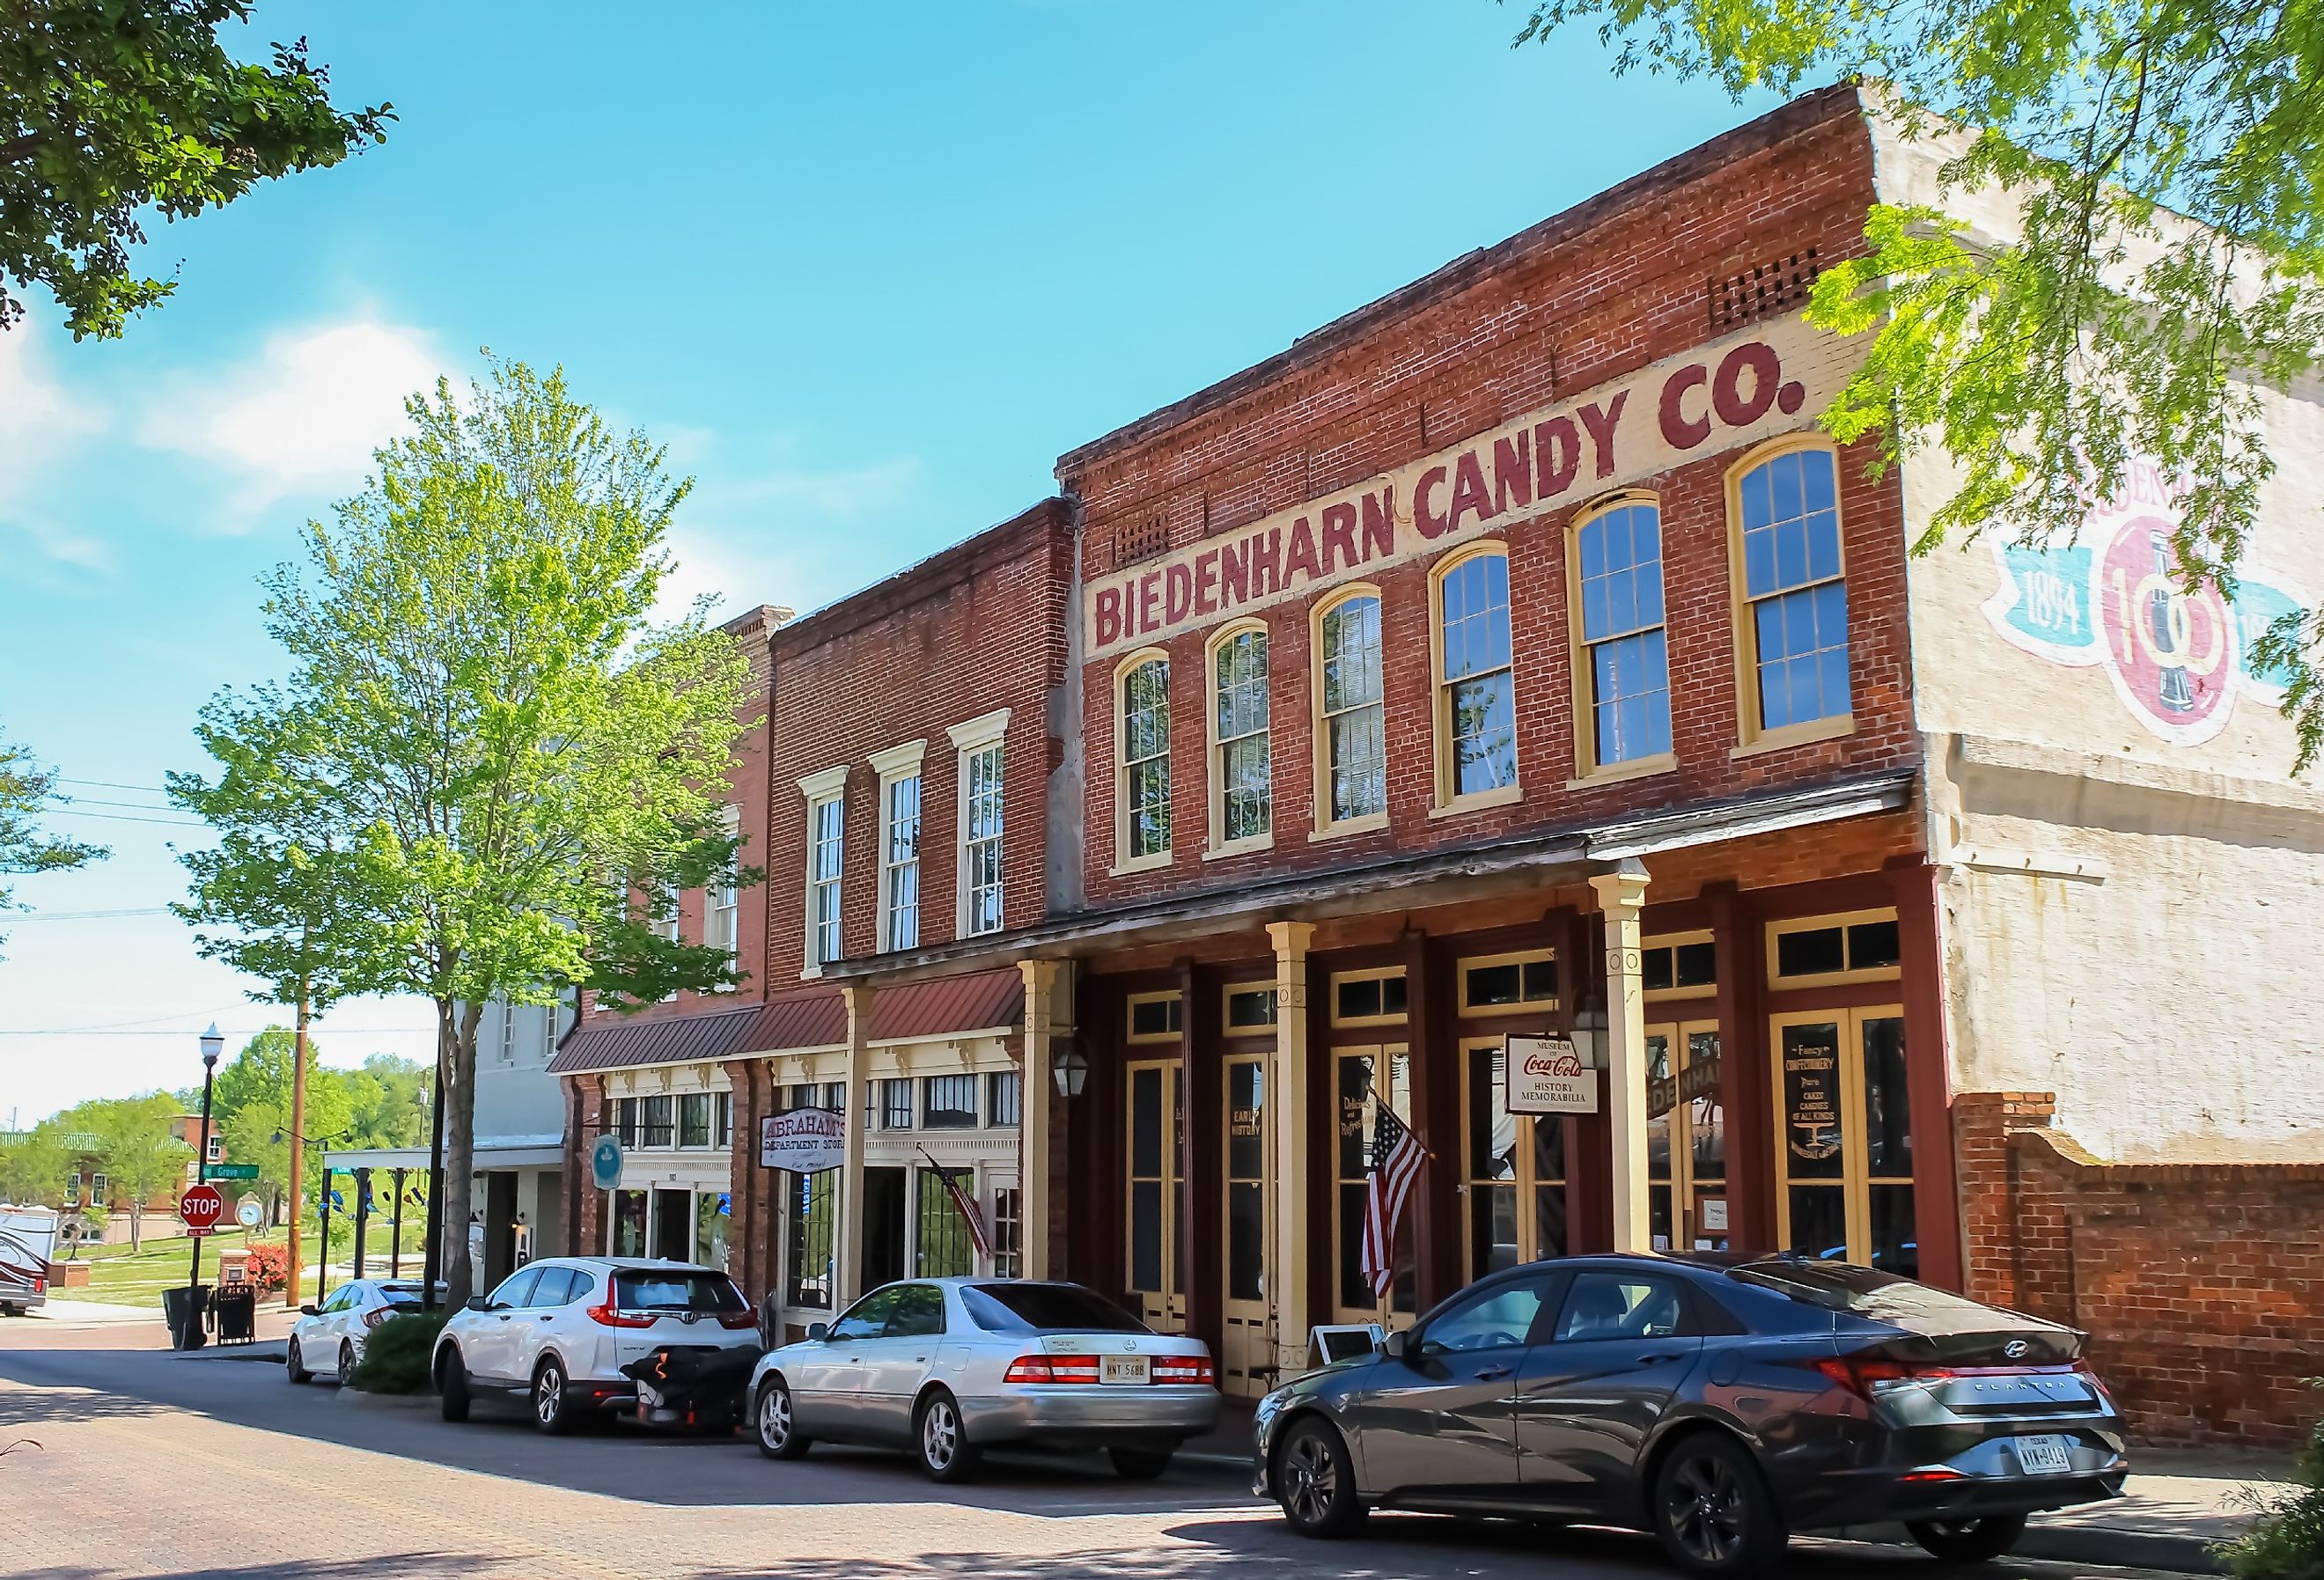 Vicksburg, Mississippi, an old building downtown on a sunny day. Image credit Sabrina Janelle Gordon via Shutterstock